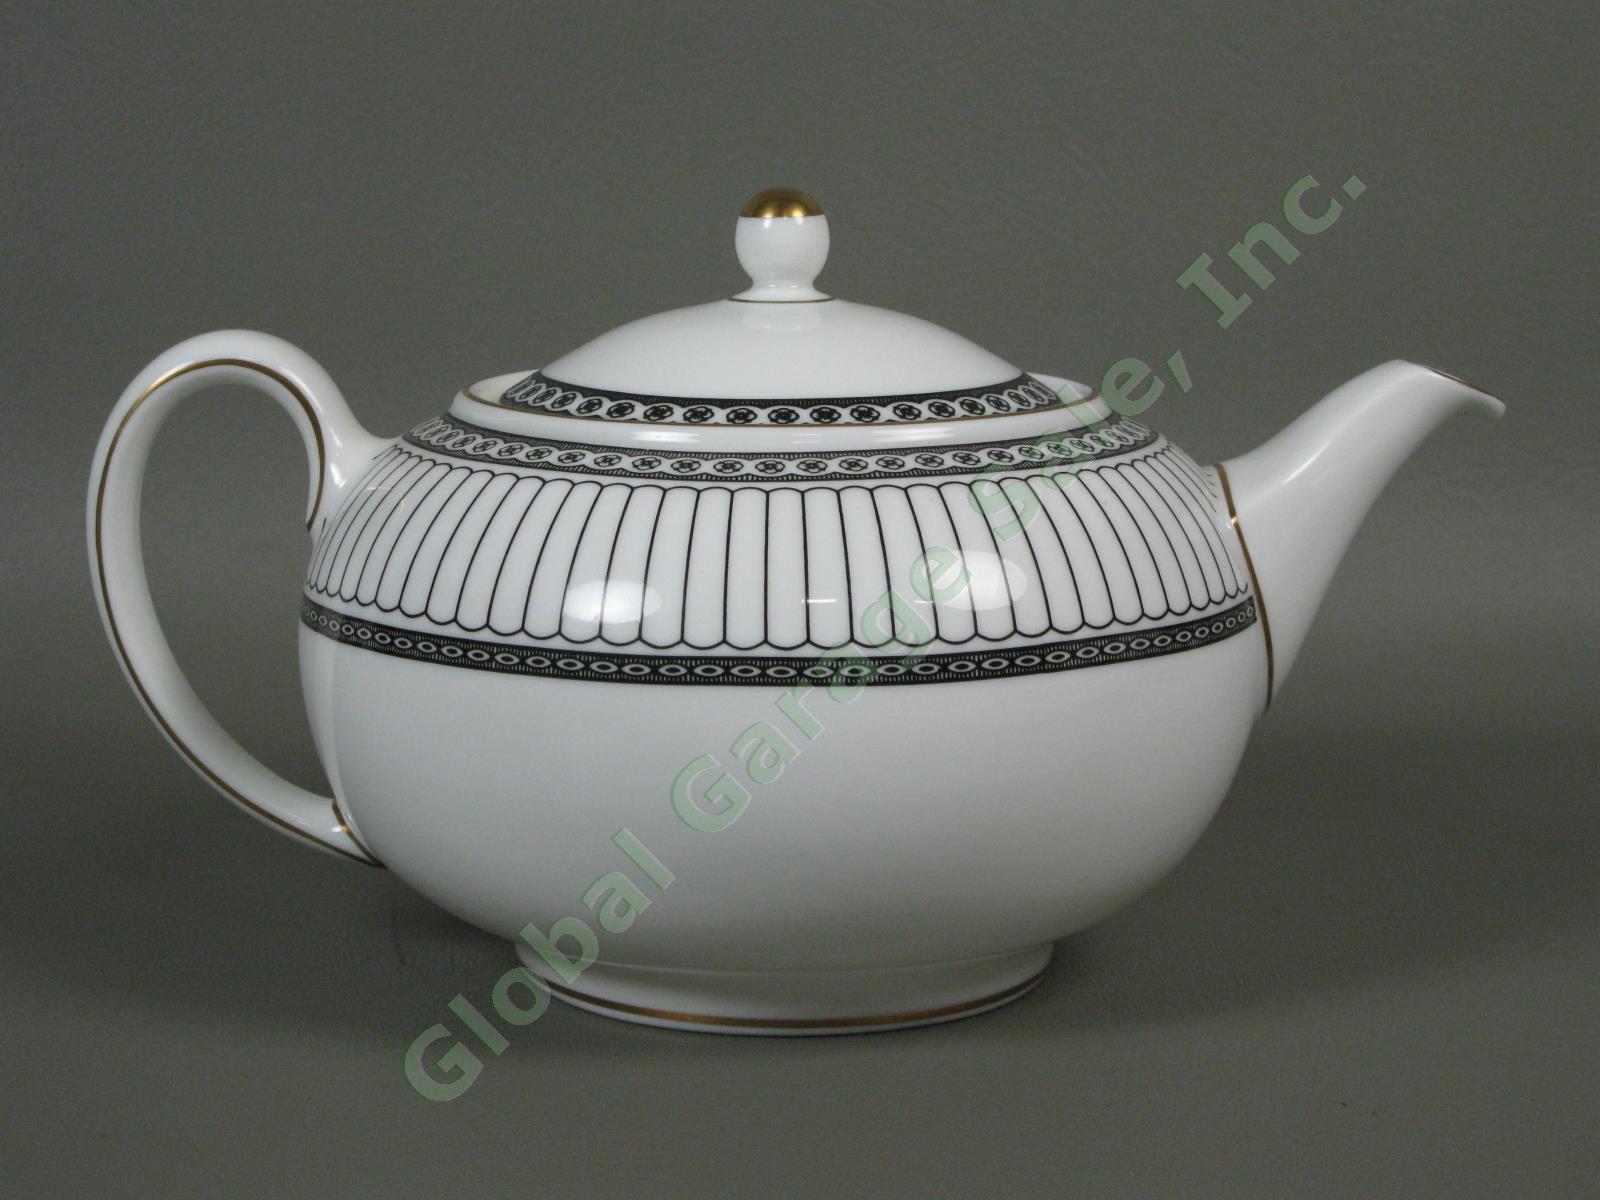 RARE 4 Cup Teapot & Lid Wedgwood Colonnade Black England Bone China Tea Pot NR 2